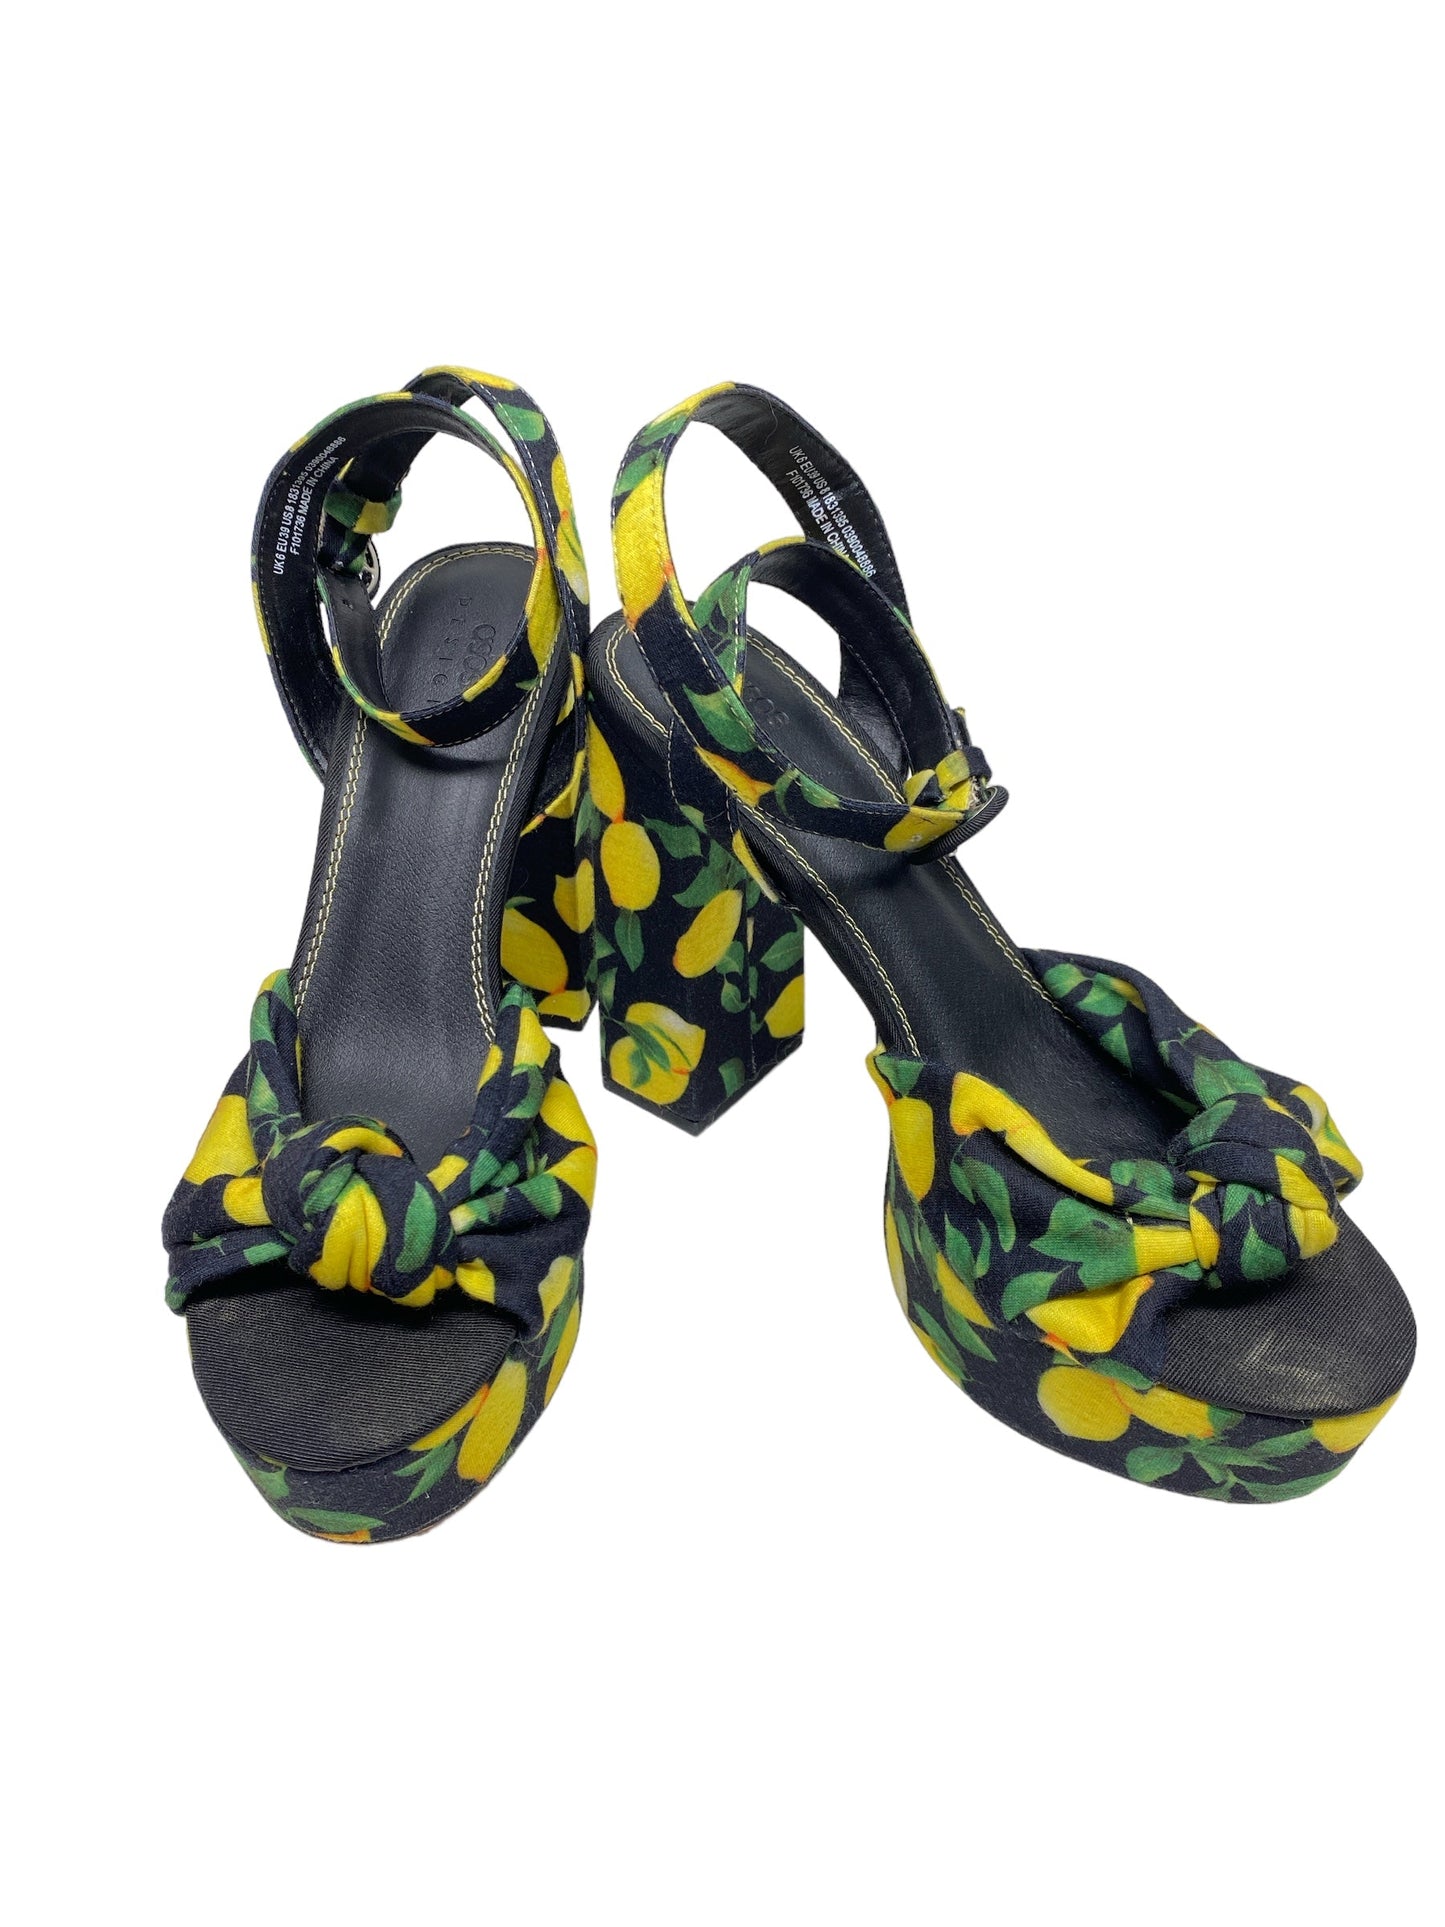 Black & Yellow Shoes Heels Platform Asos, Size 8